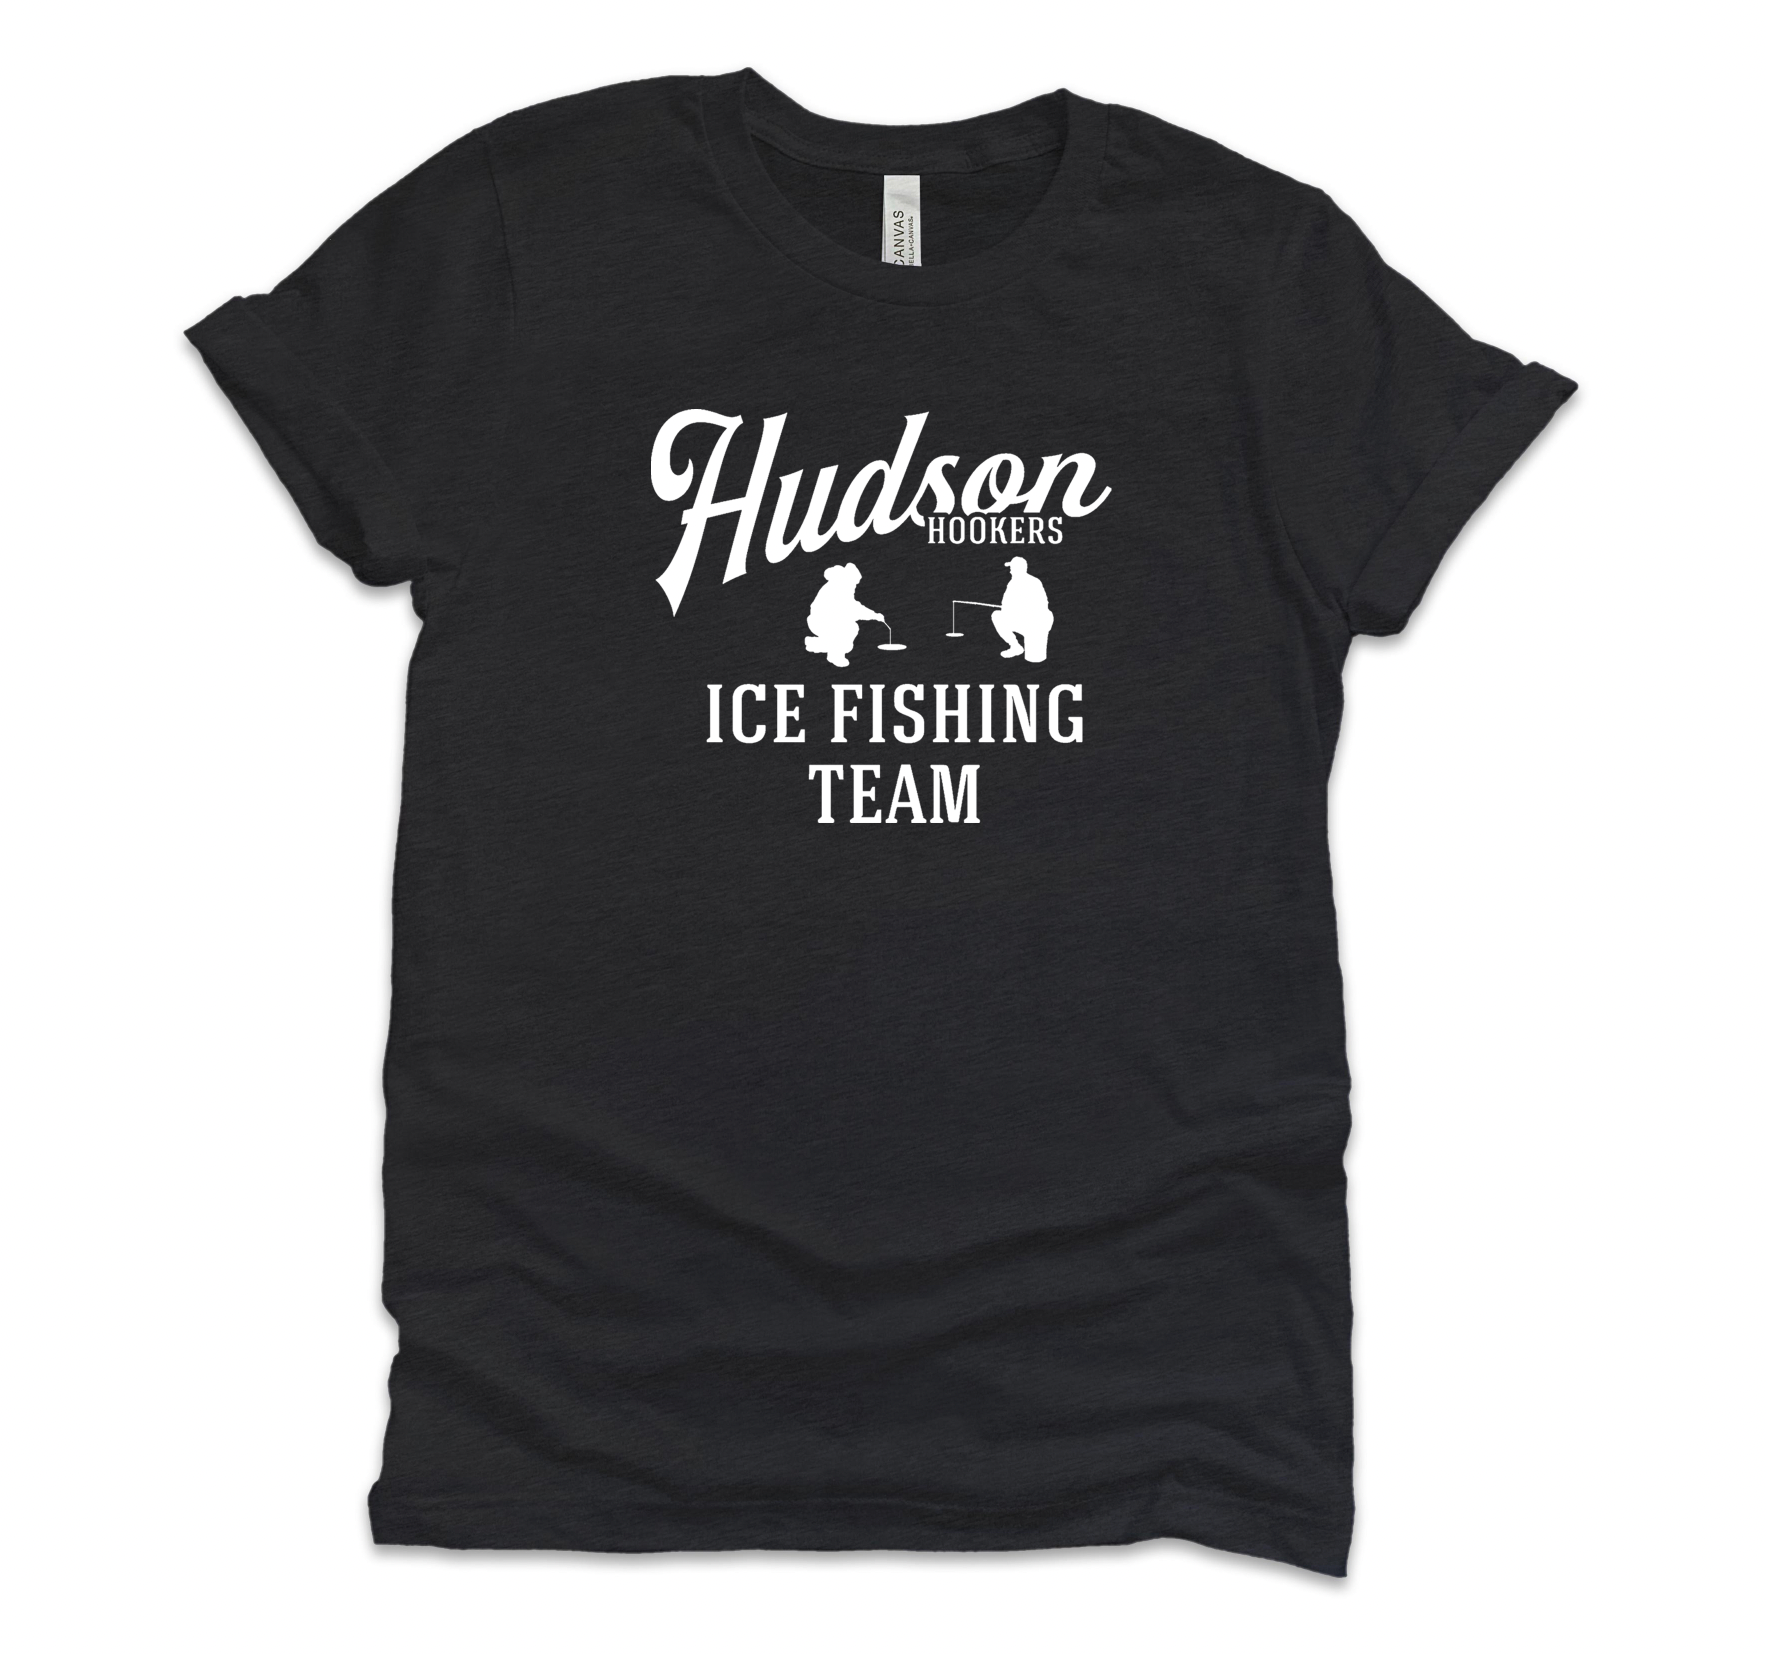 Hudson Hookers Ice Fishing Team Tee